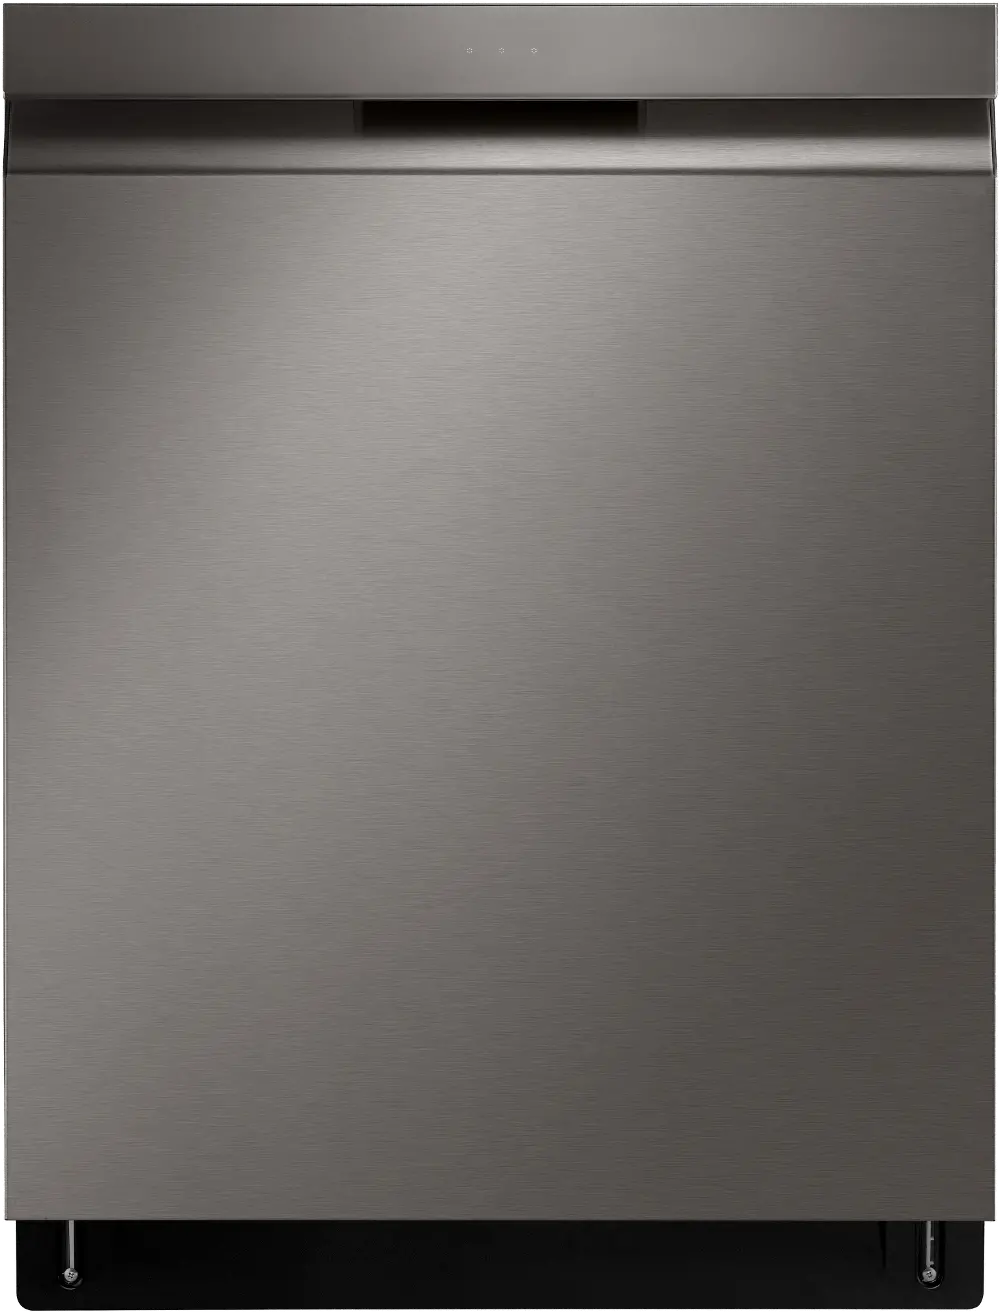 LDP6810BD LG Top Control Dishwasher - Stainless Steel-1